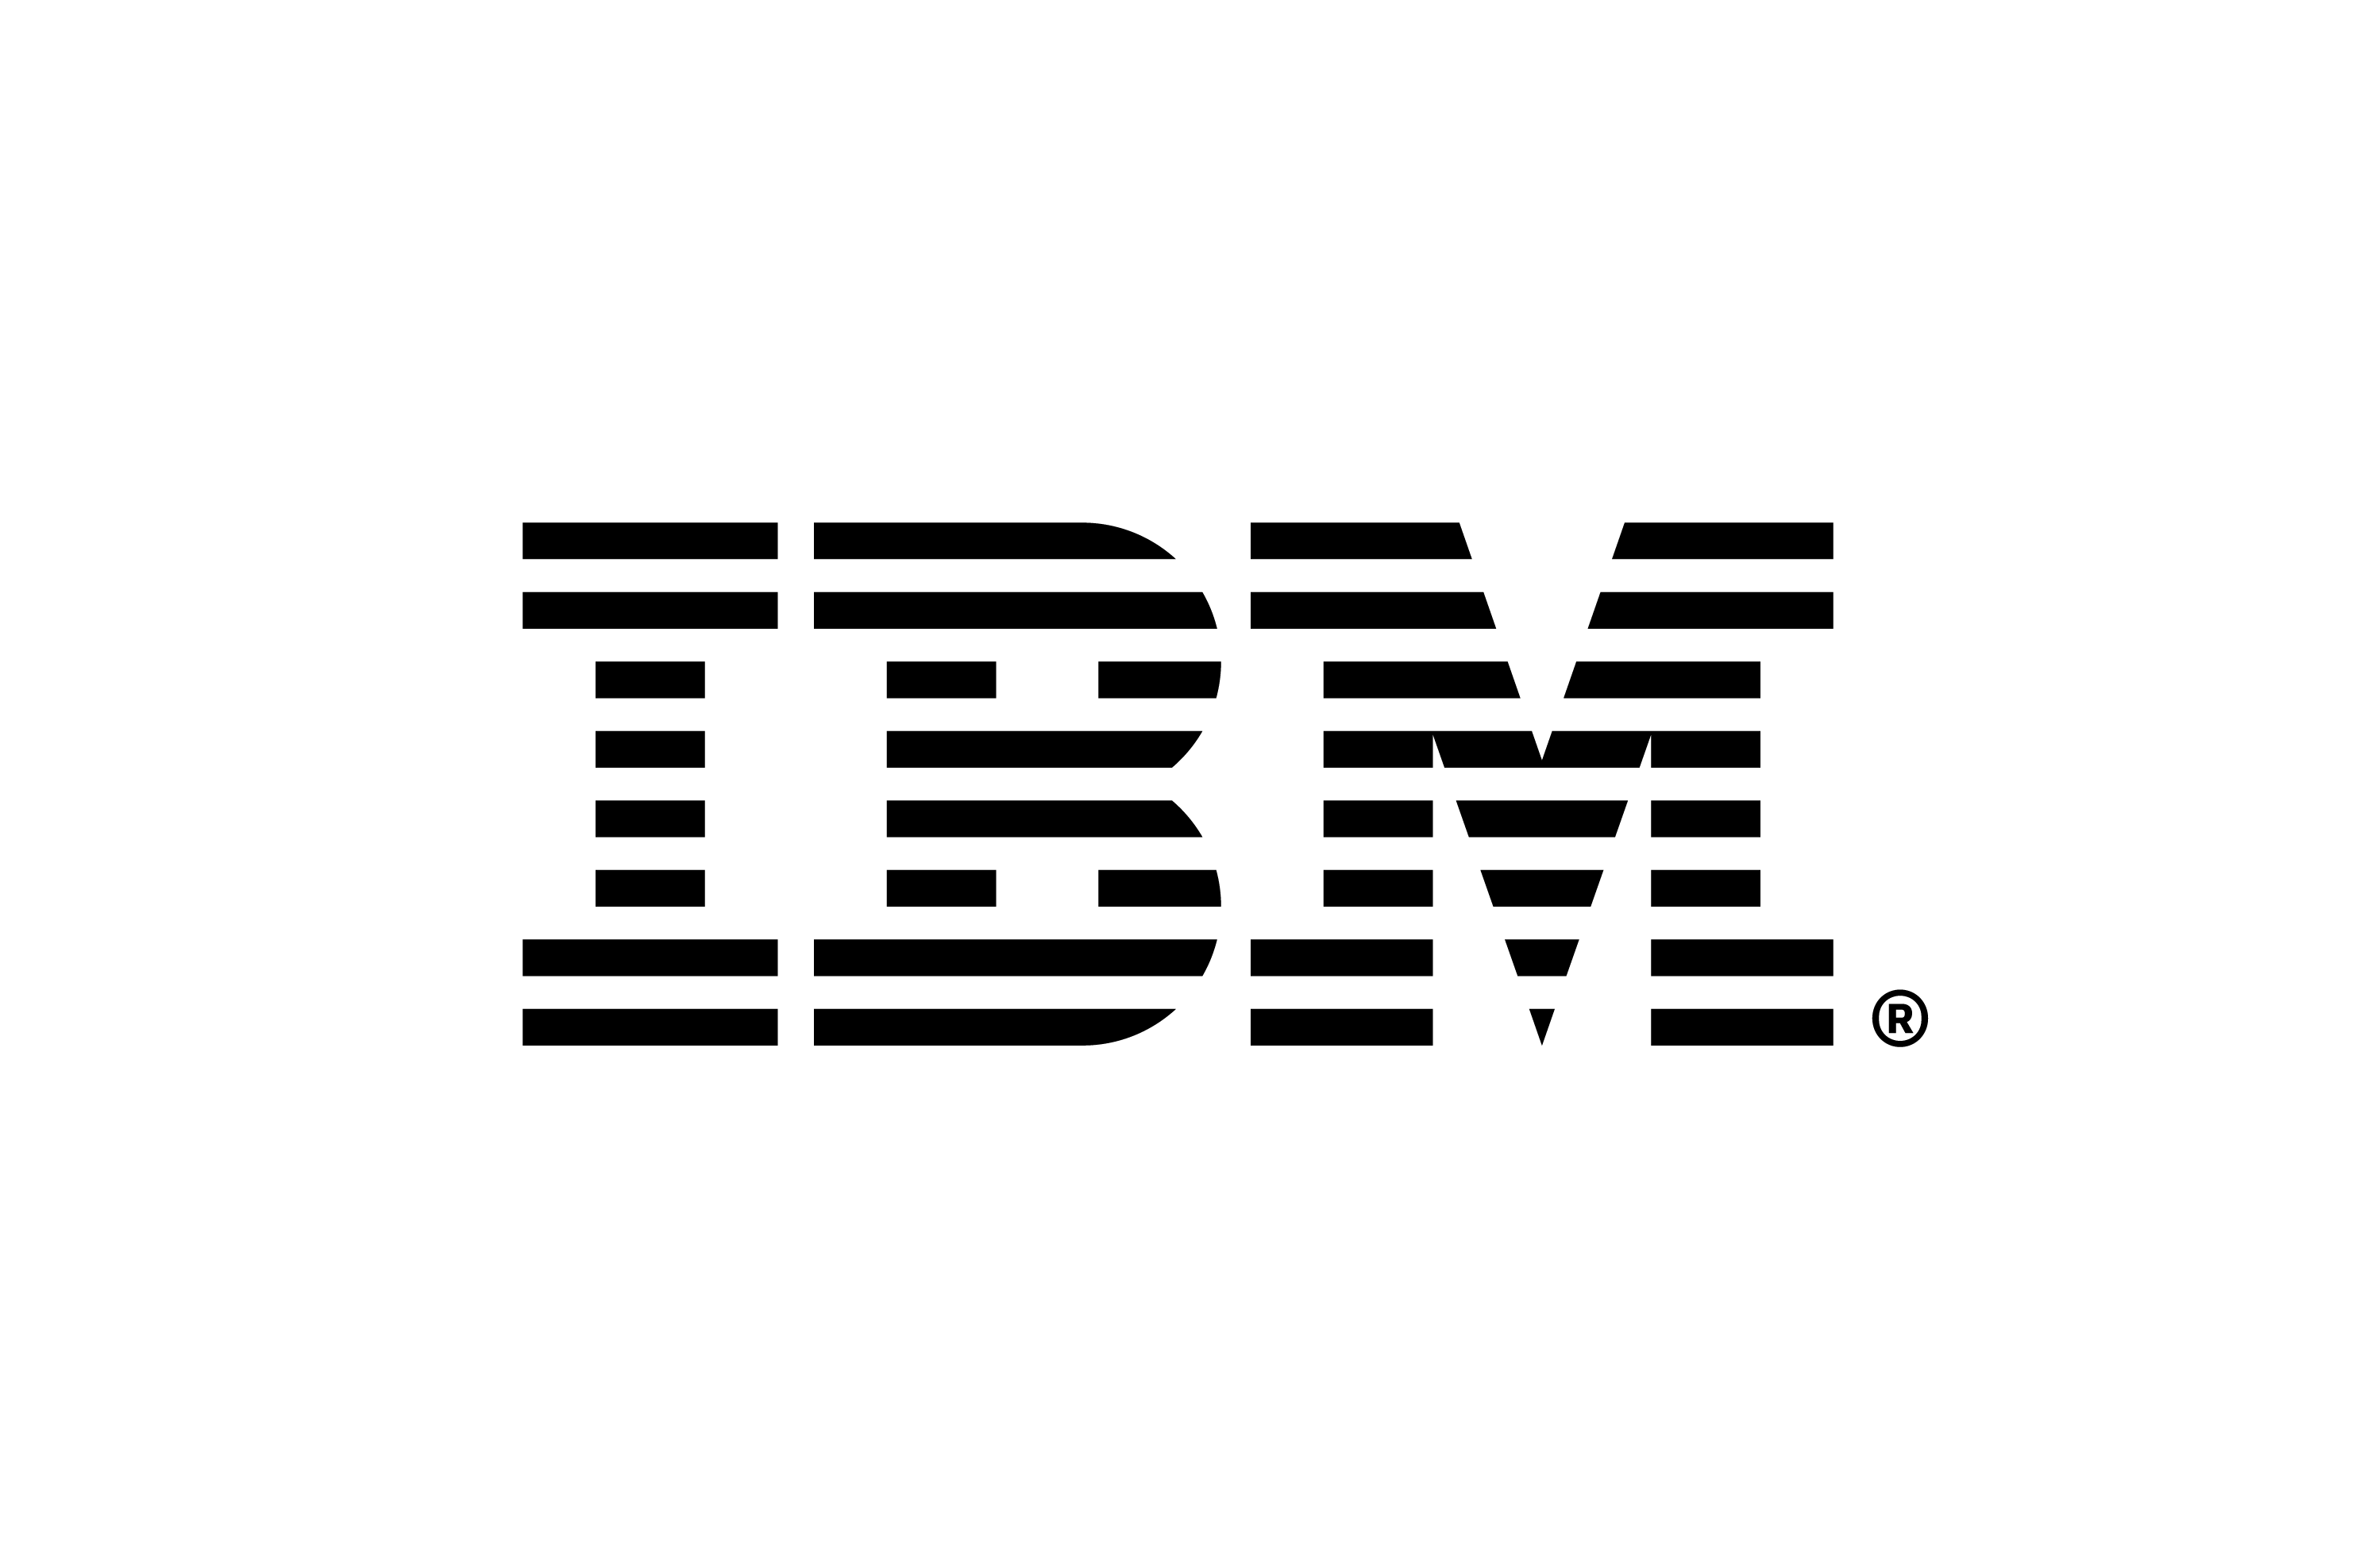 black IBM logo on a white background